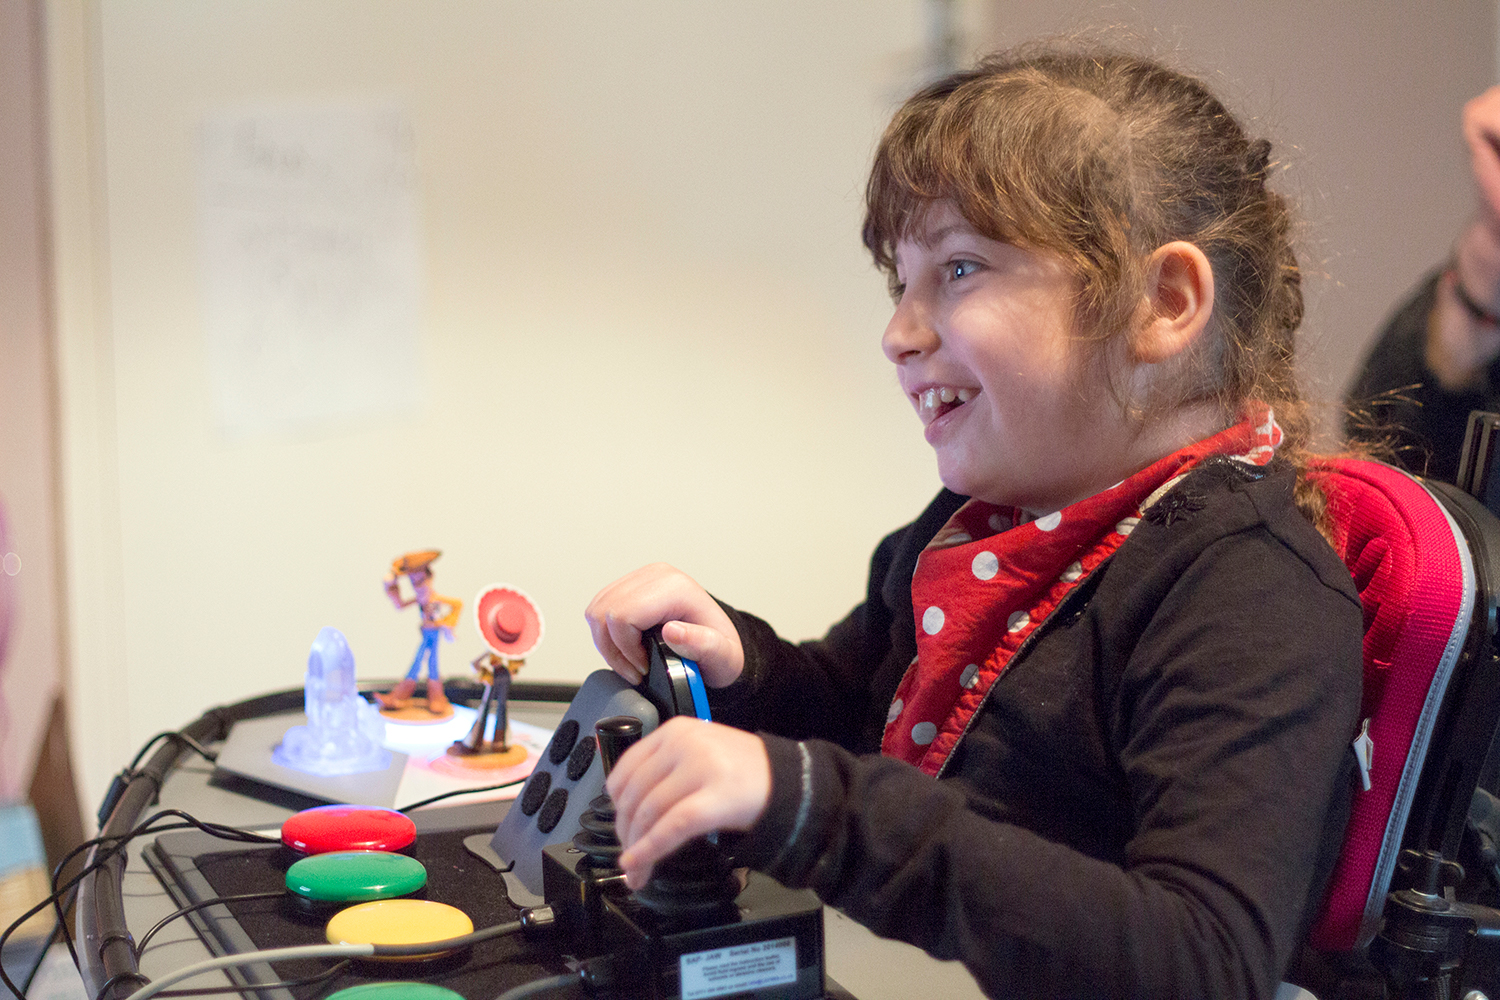 Smiling girl using adapted gaming controls